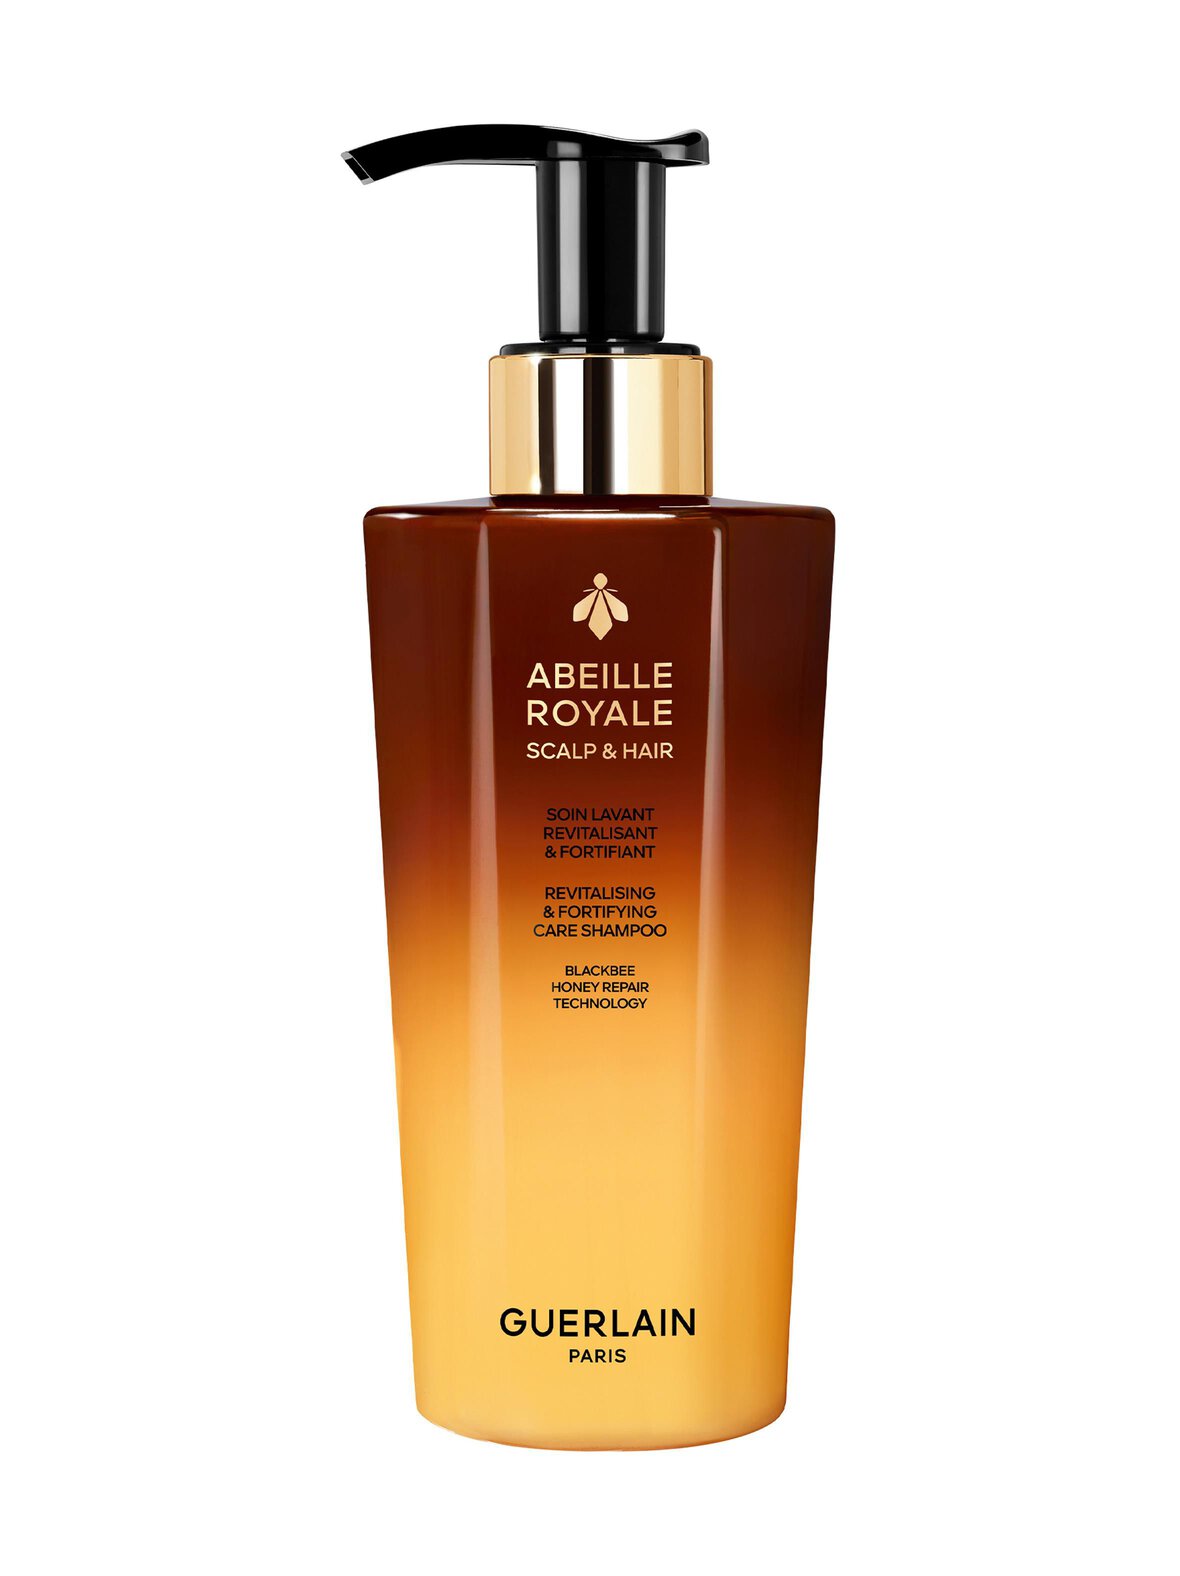 Guerlain Abeille royale revitalising & fortifying care -shampoo